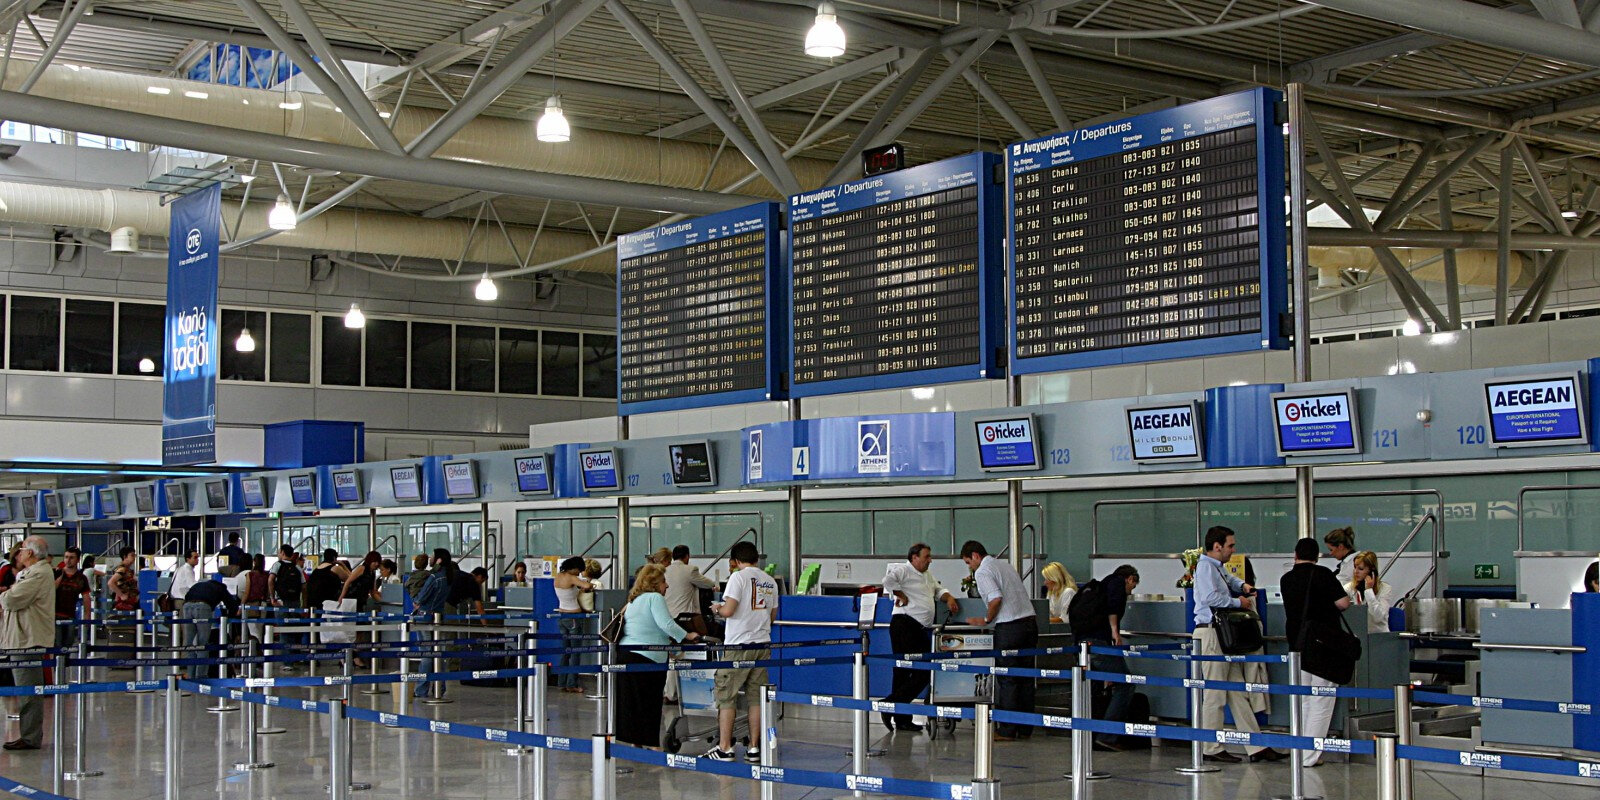 More information about "Πάνω από 35 εκατ οι επιβάτες στα αεροδρόμια της χώρας"